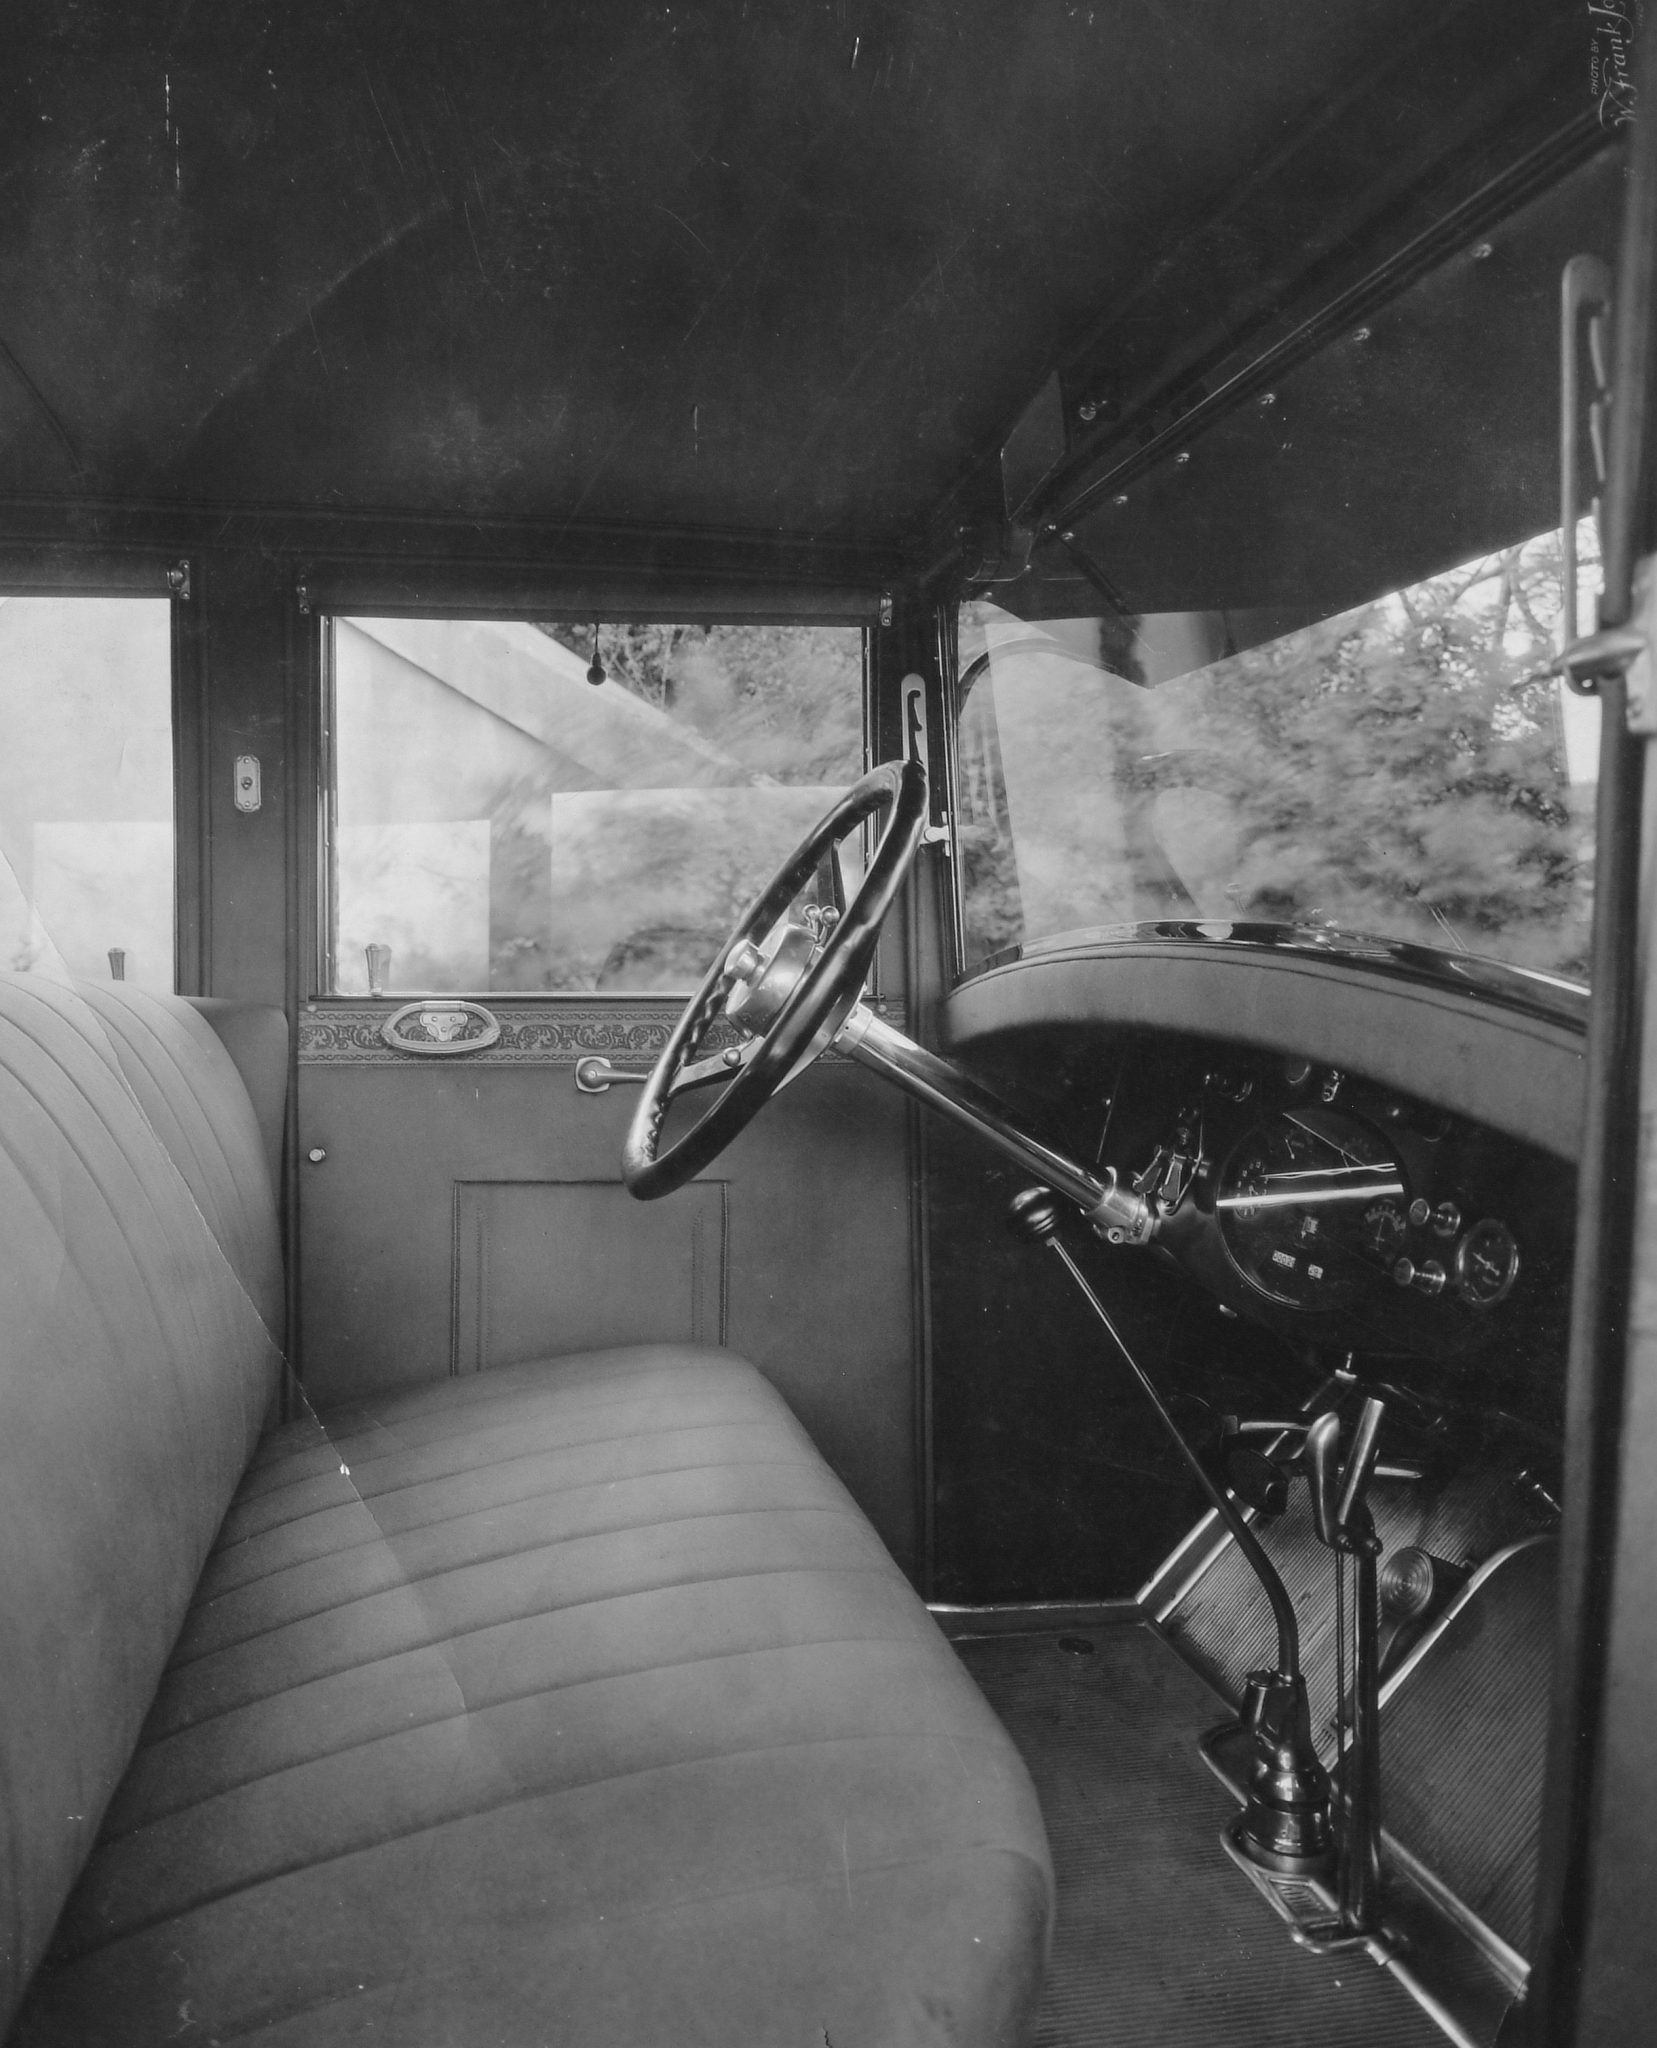 Model A Duesenberg Interiot and Steering Wheel